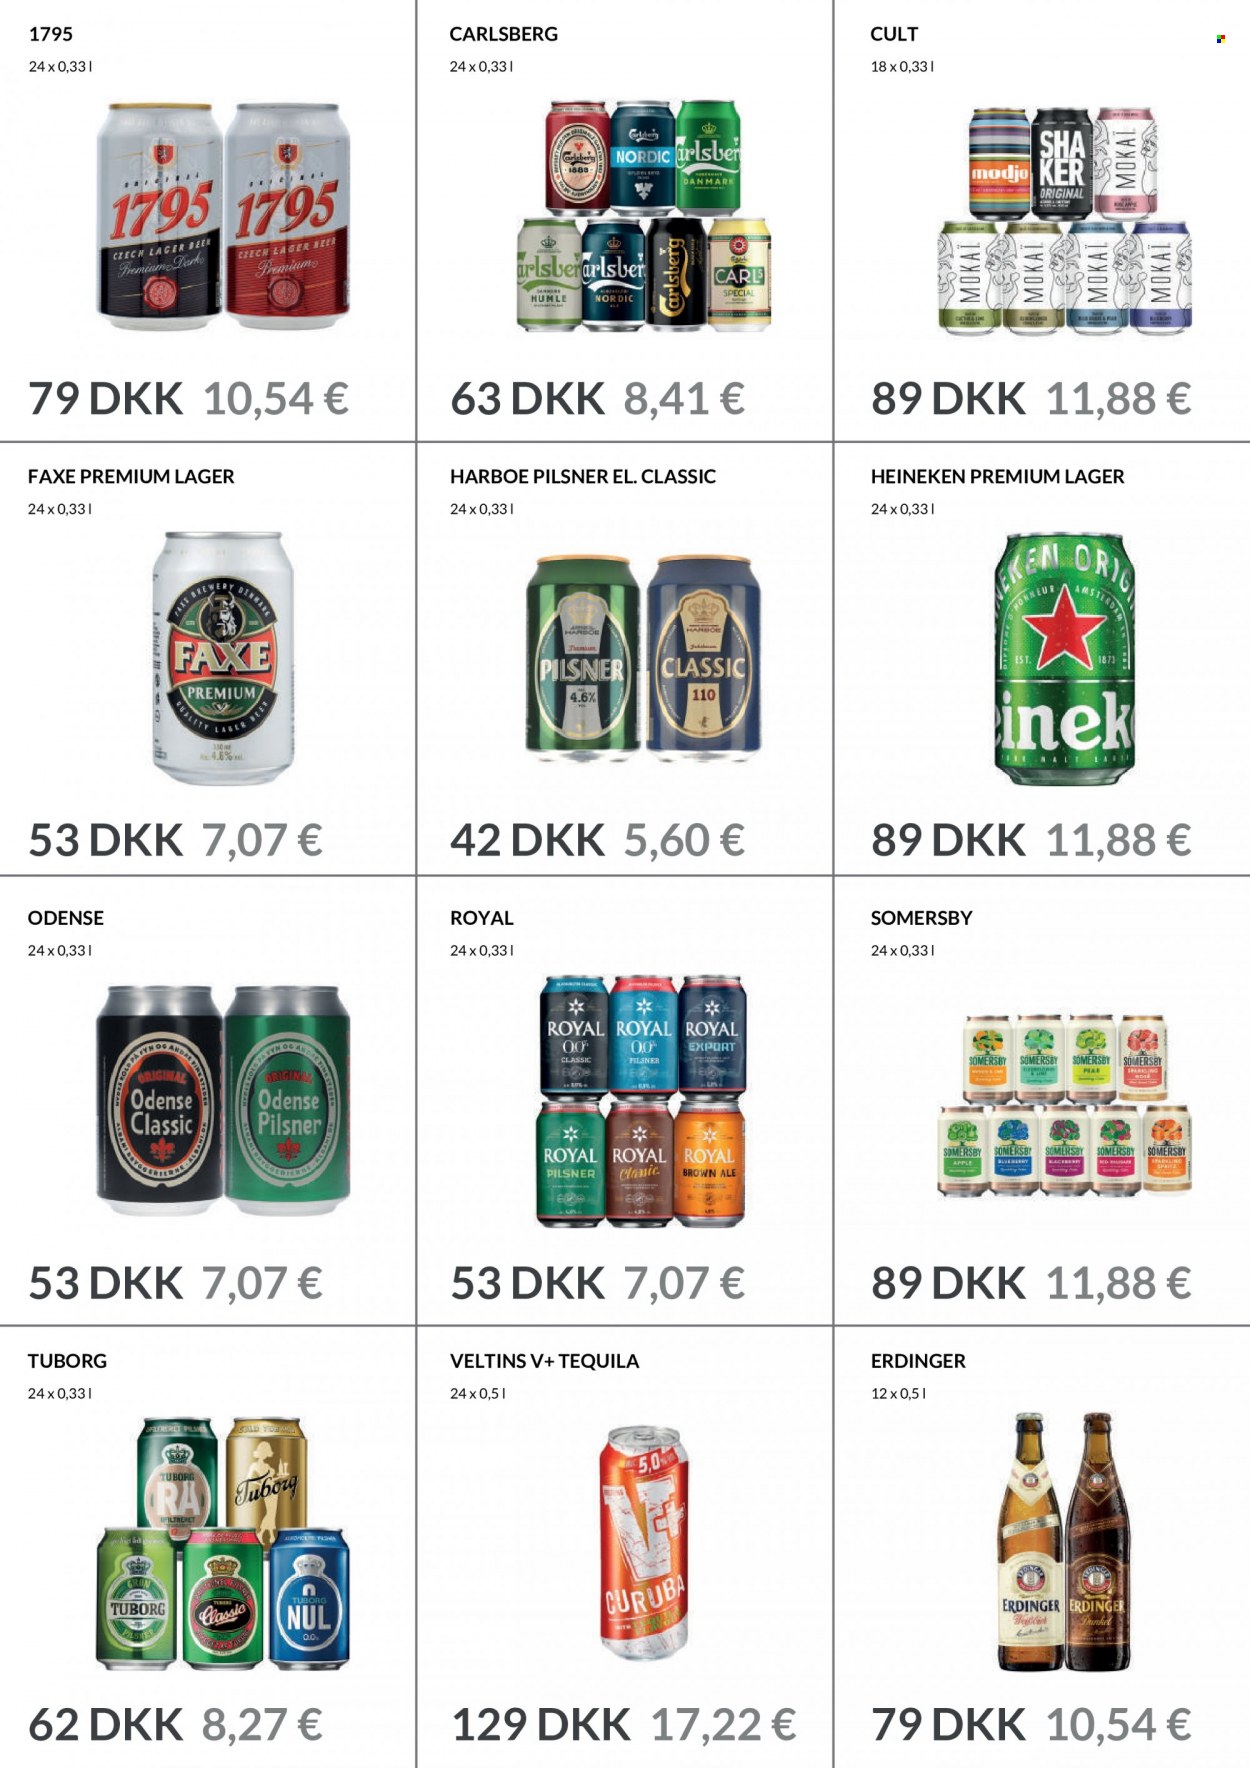 thumbnail - Nielsen Discount tilbud  - 7.7.2022 - 21.8.2022 - tilbudsprodukter - 1795 Original Czech Lager, brown ale, Carlsberg, Heineken, Royal Pilsner, Tuborg, øl, Harboe pilsner, tequila, Mokaï. Side 5.